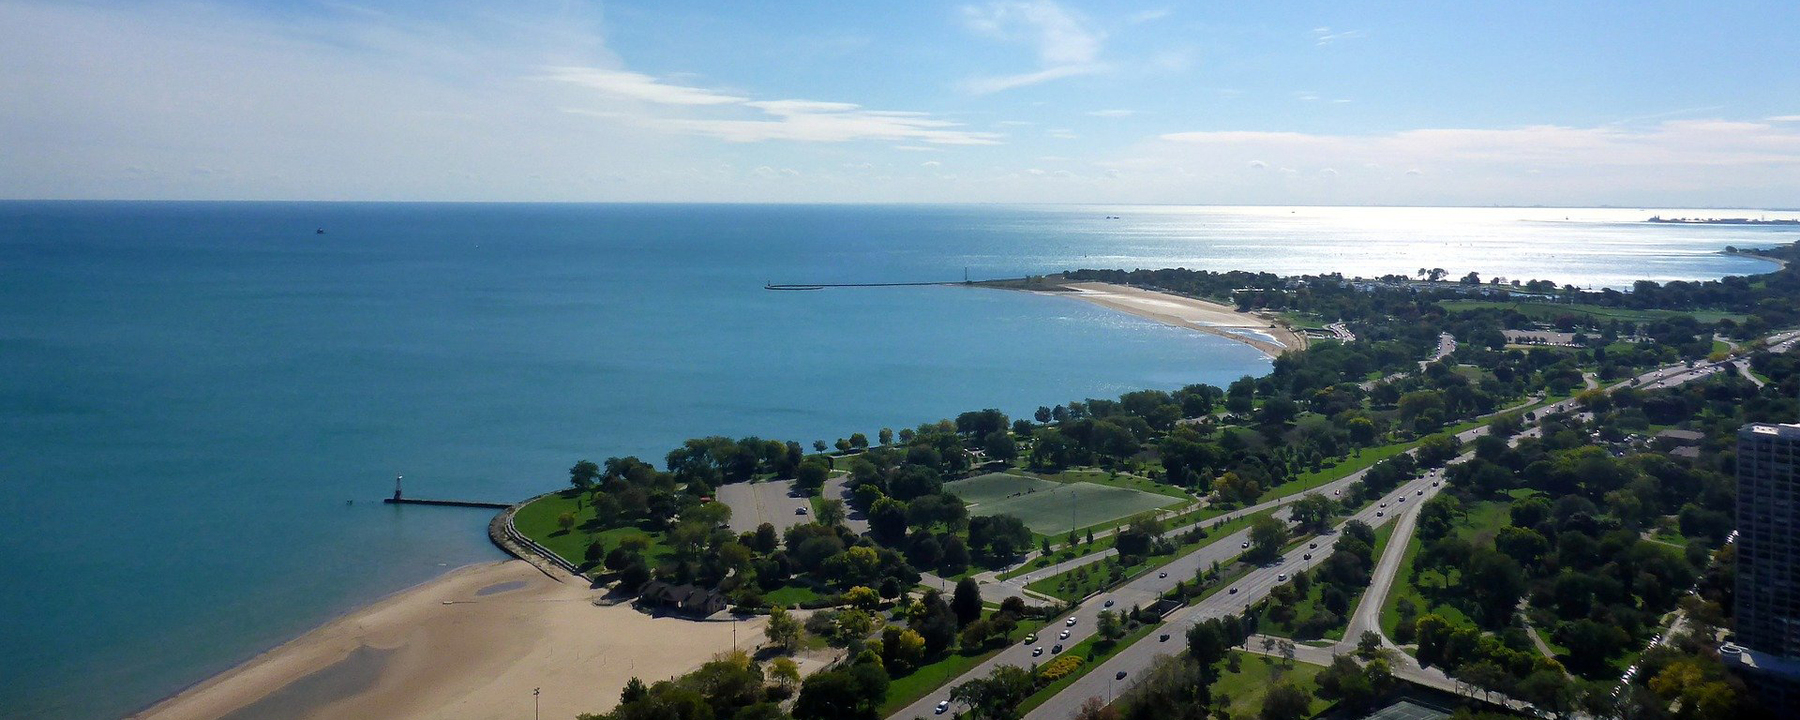 A coastal view